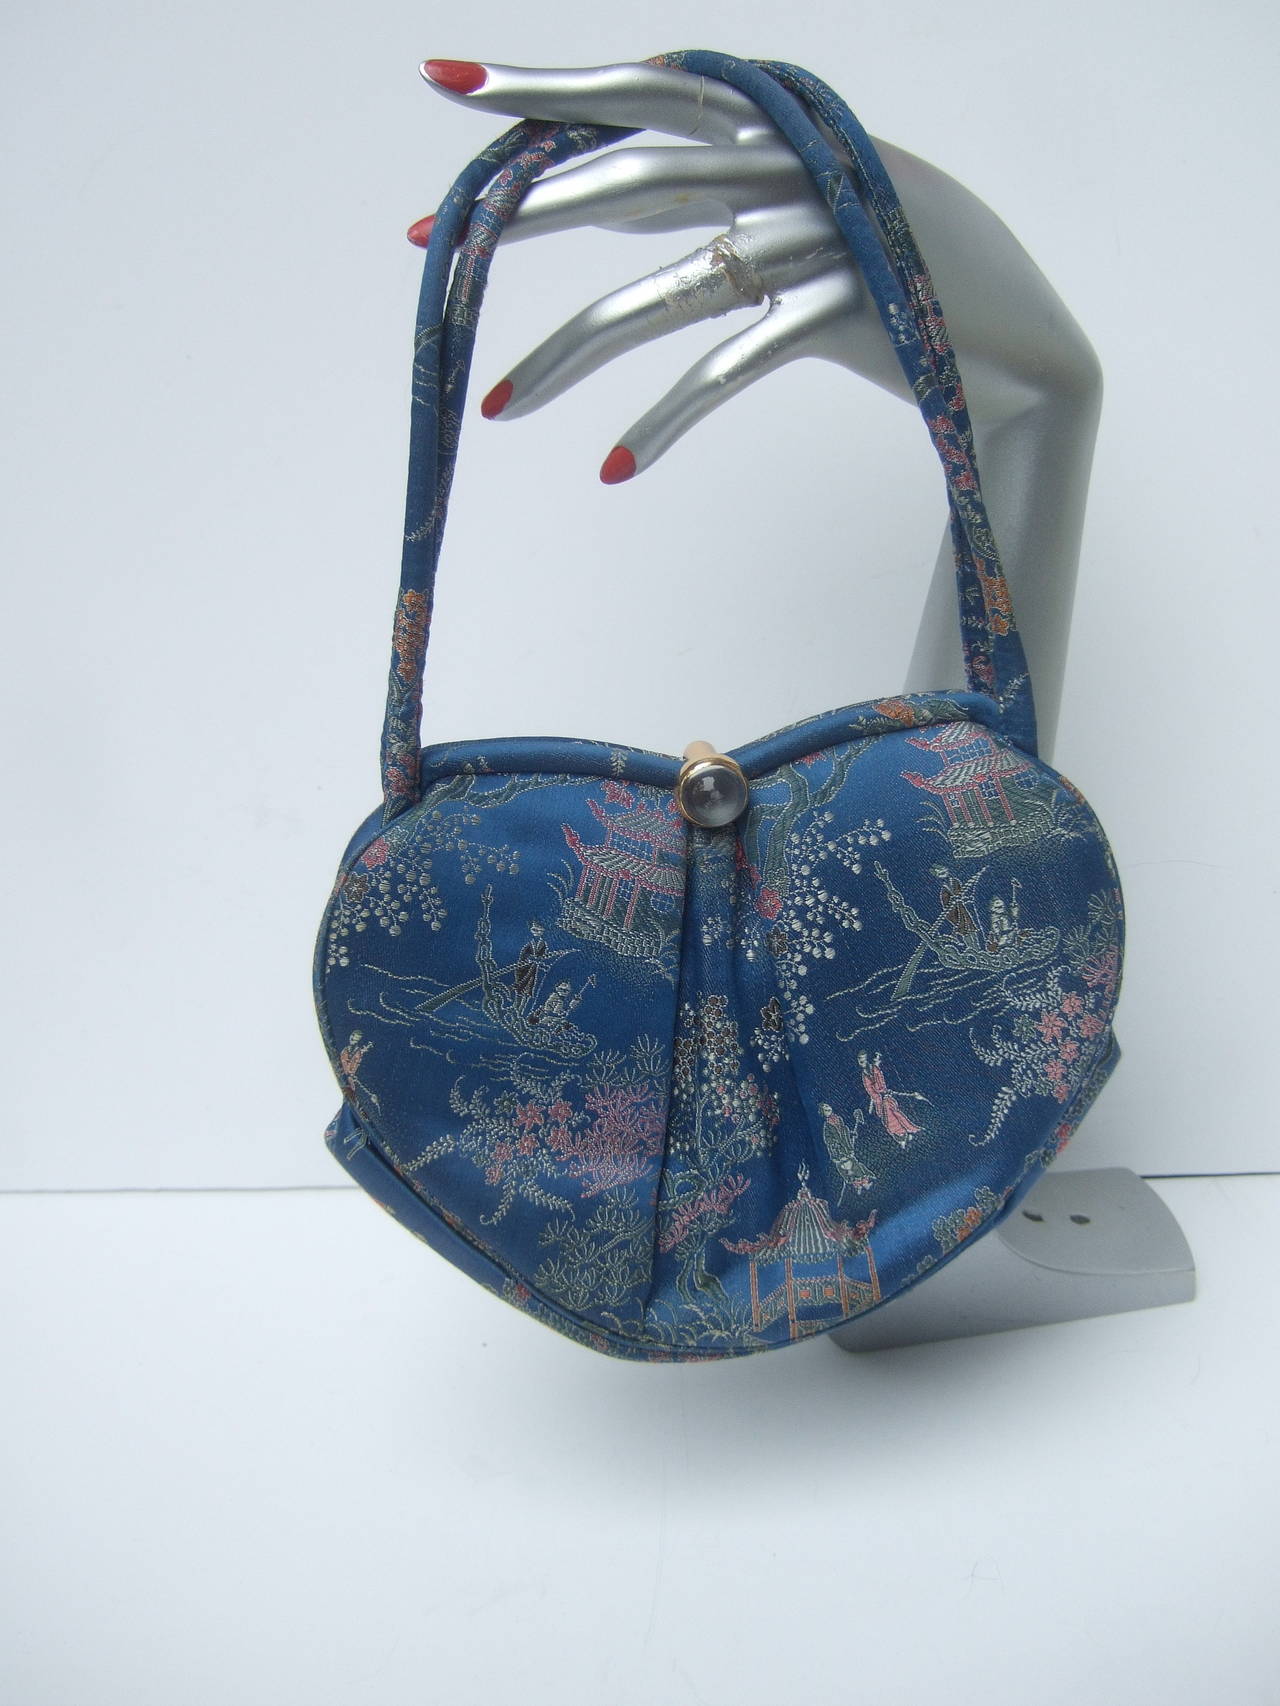 Saks Fifth Avenue Blue Satin Chinoiserie Handbag c 1960 For Sale at 1stdibs